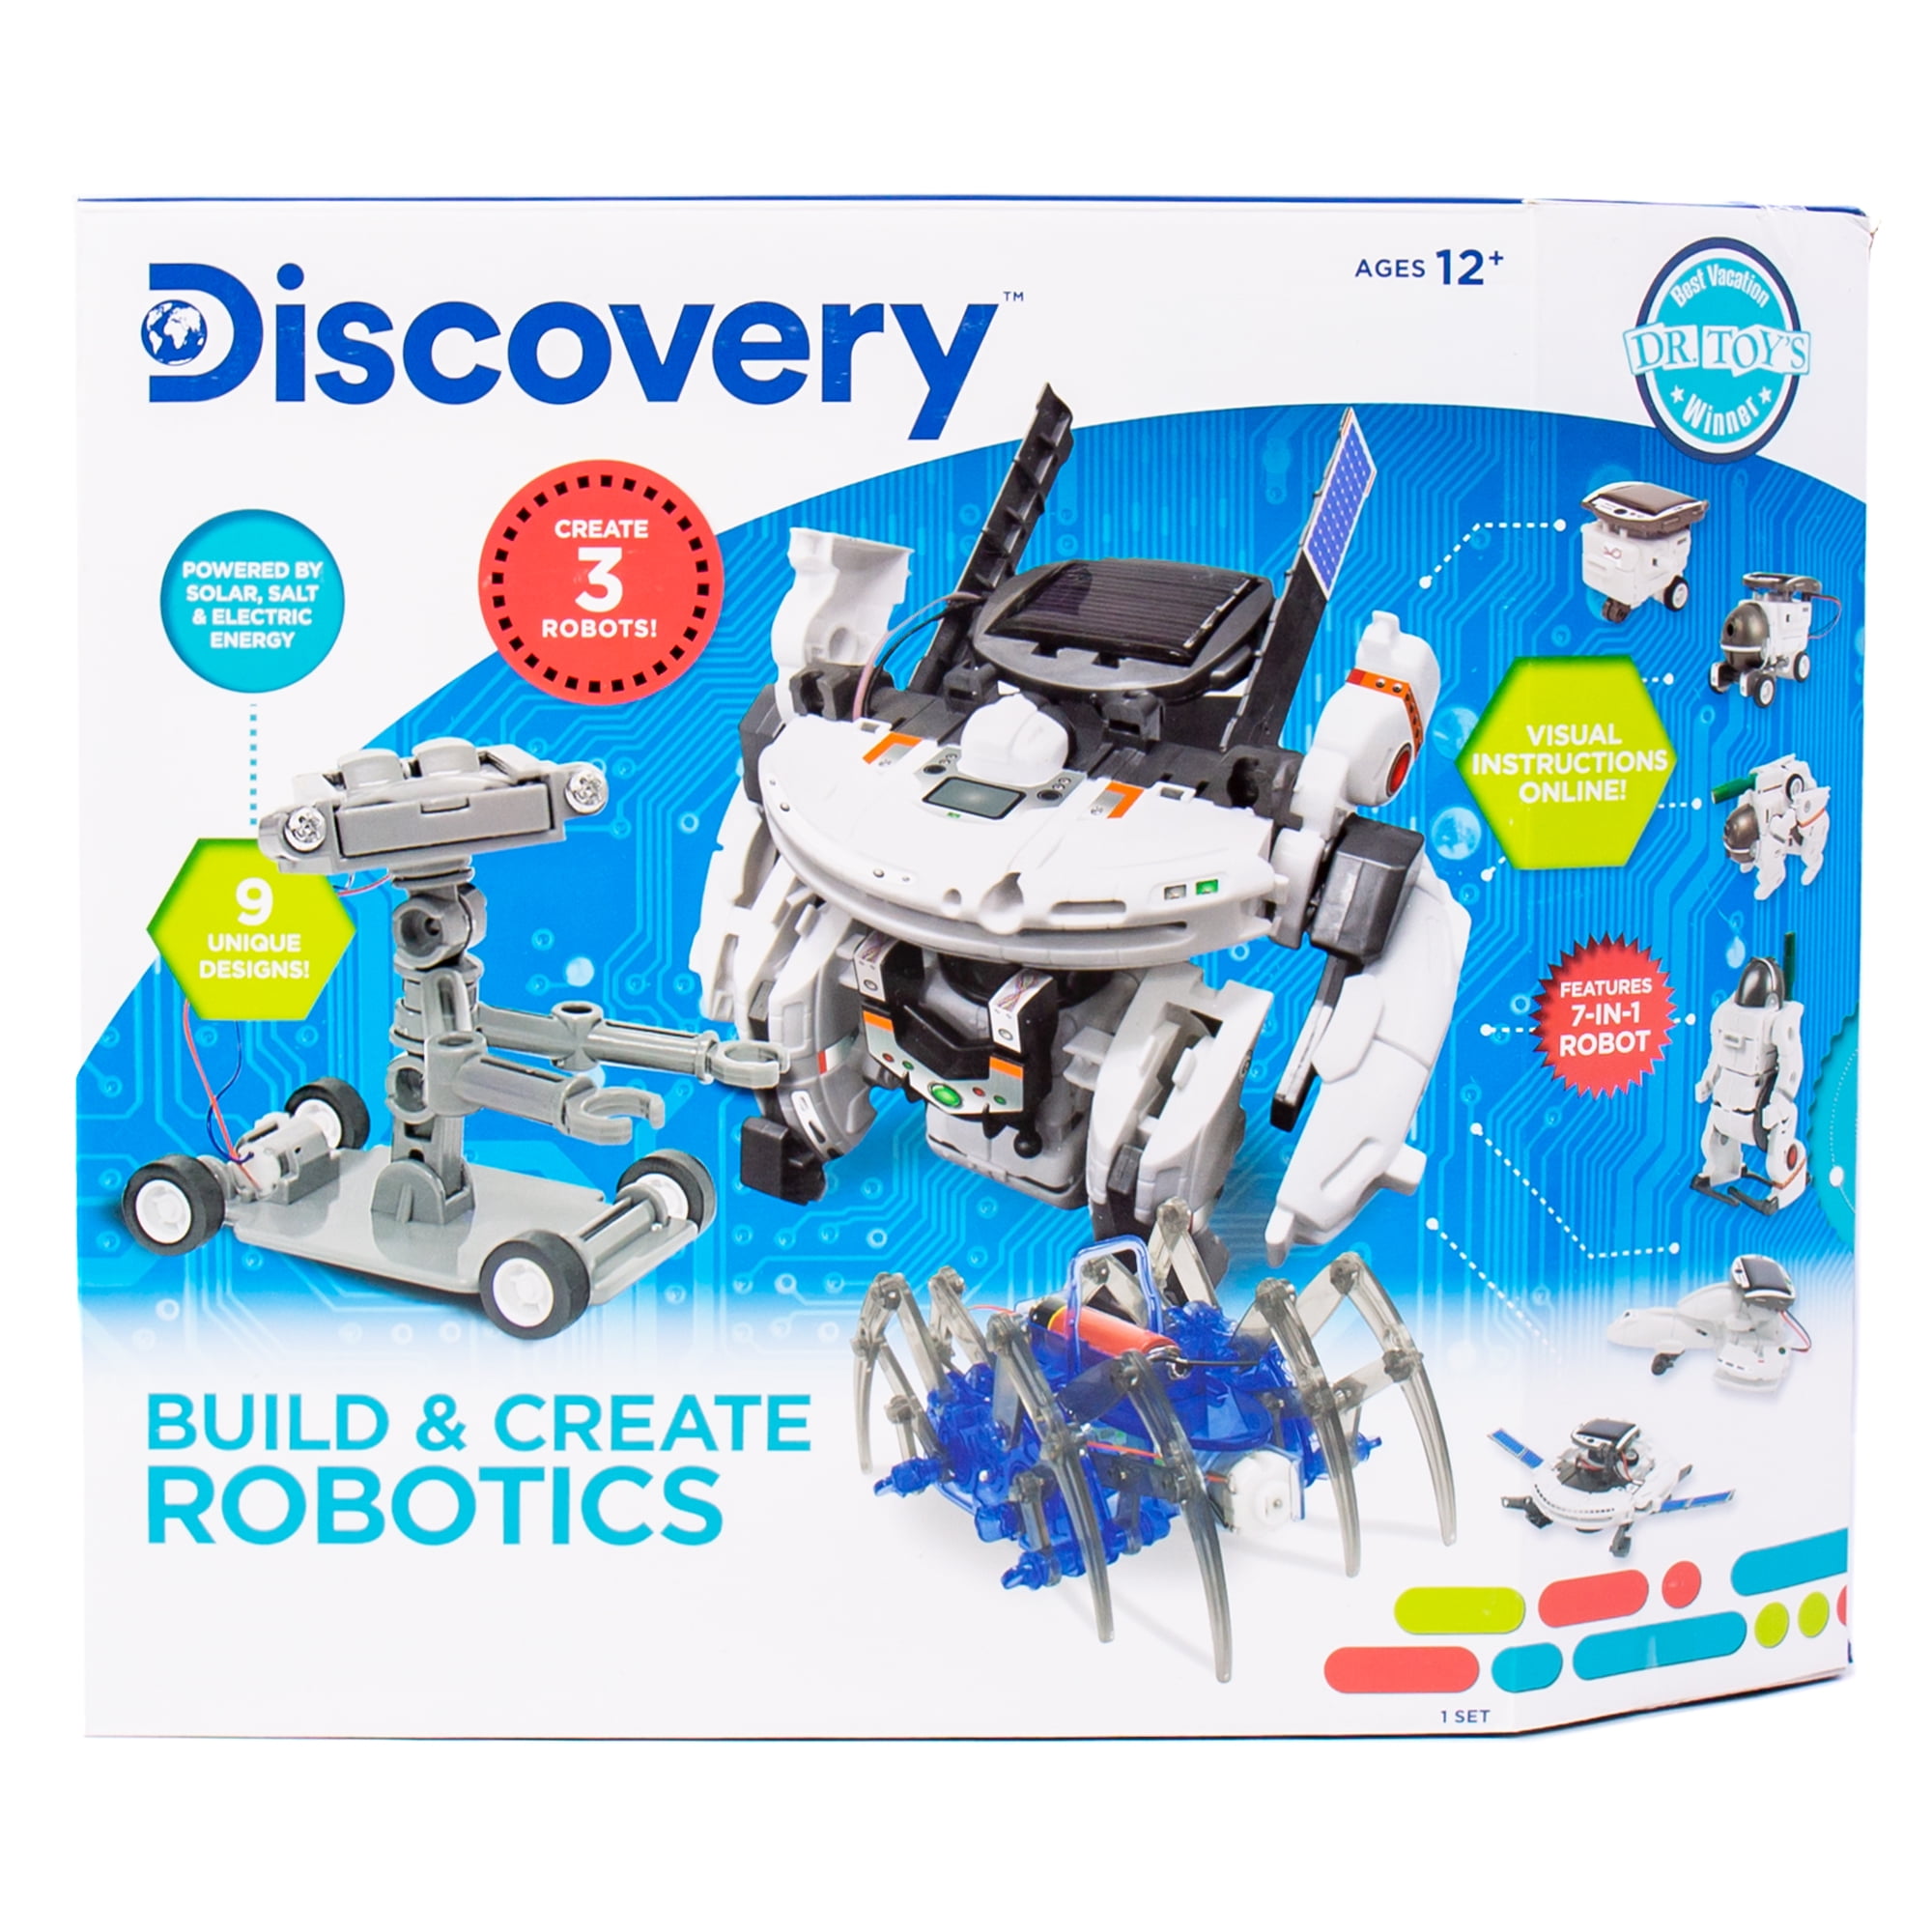 Blue Interactive Smart Robot for Kids Novie 